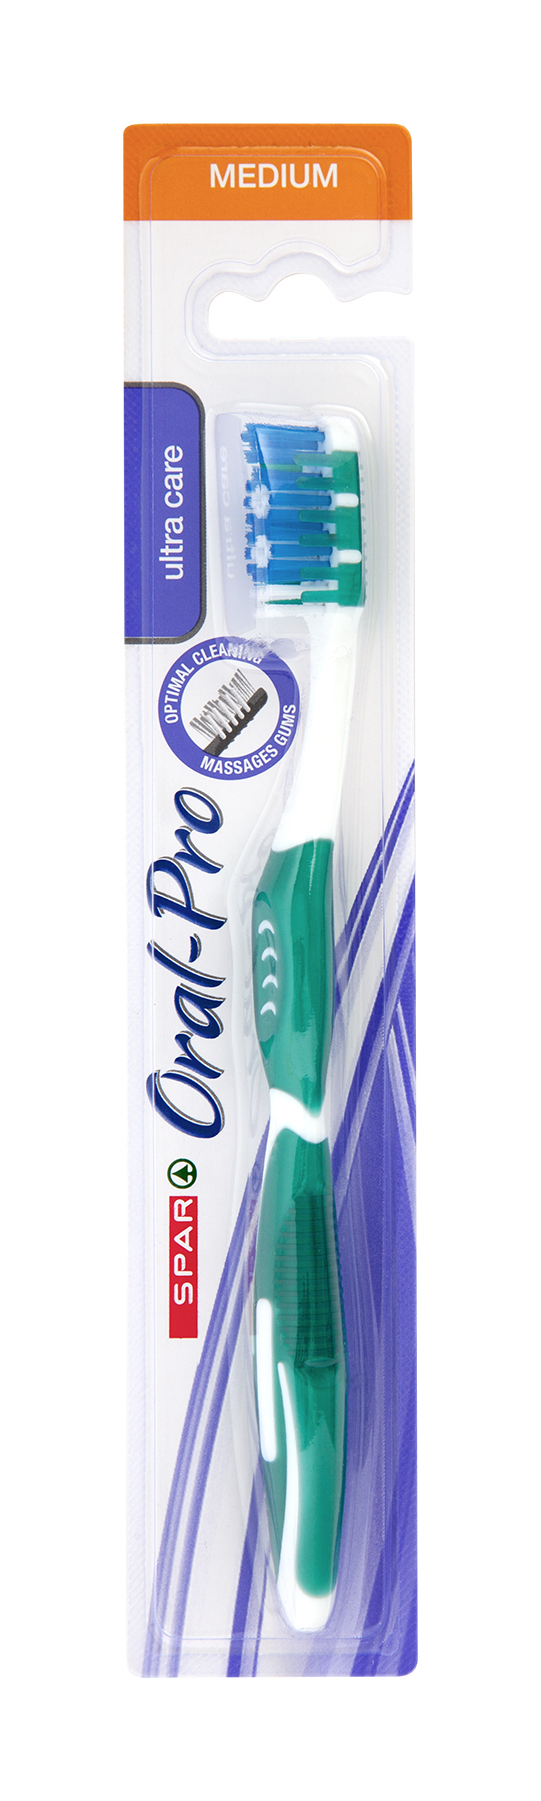 oral pro toothbrush ulta care - medium